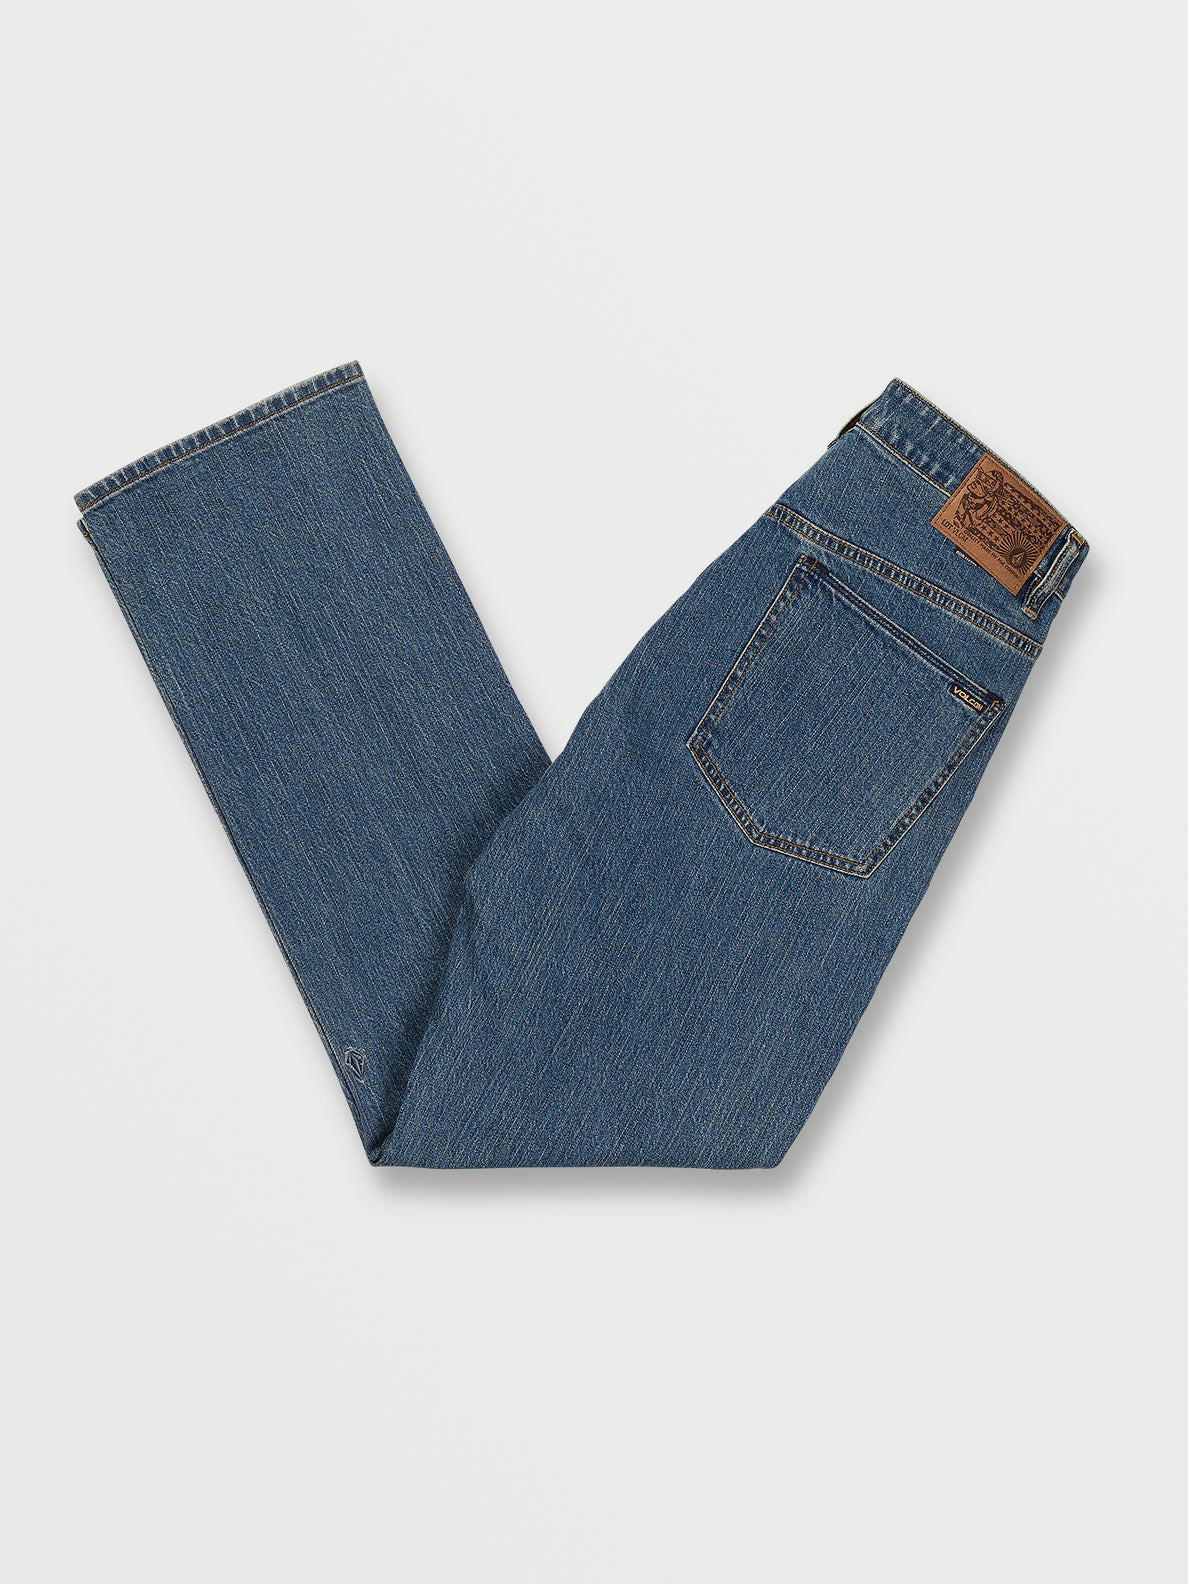 Solver Modern Fit Jeans - Aged Indigo (A1932204_AIN) [B]